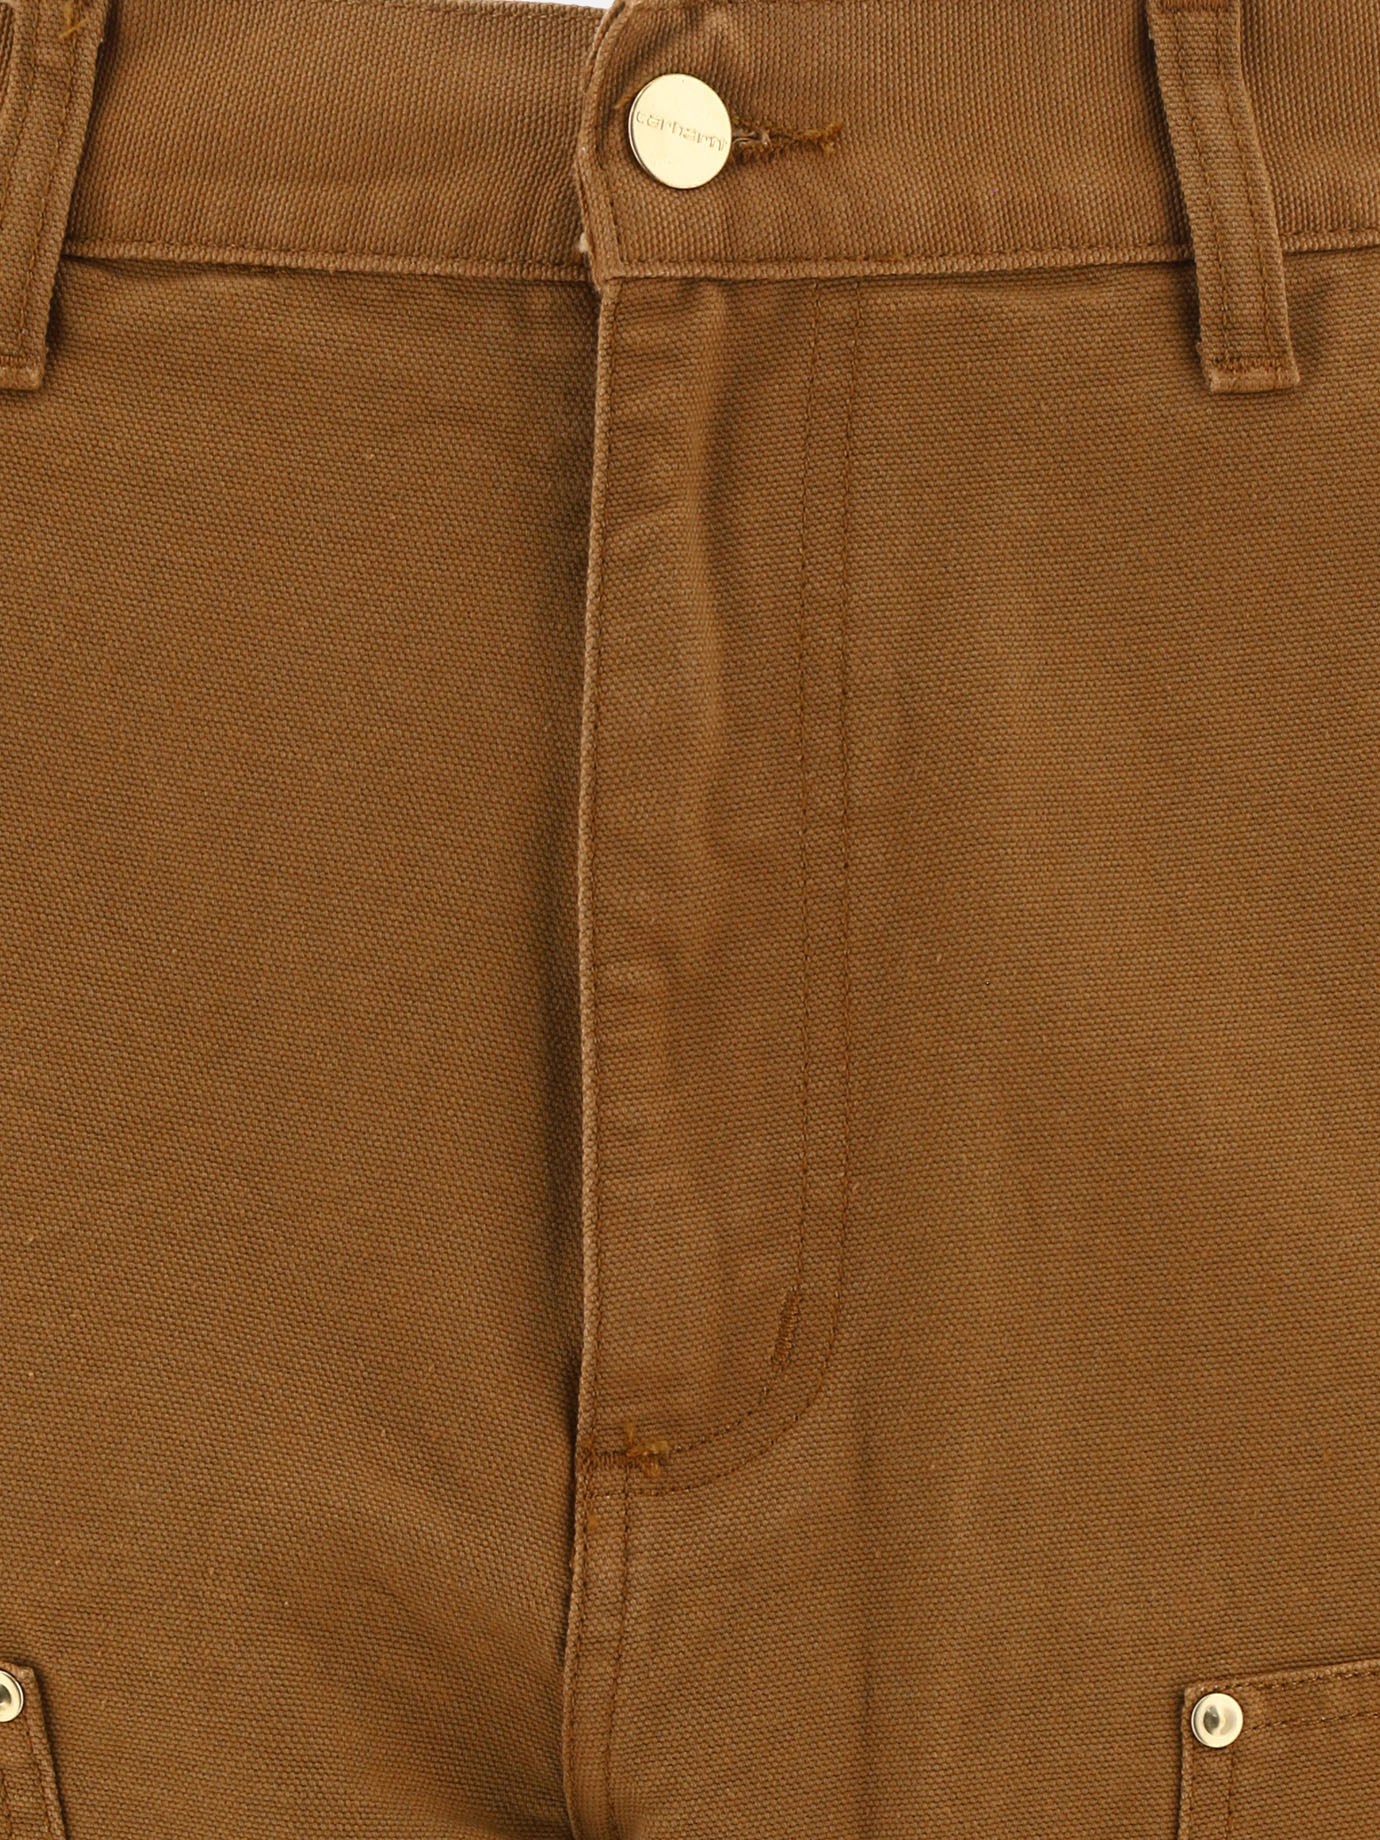 Pantaloni  Double Knee  by Carhartt WIP